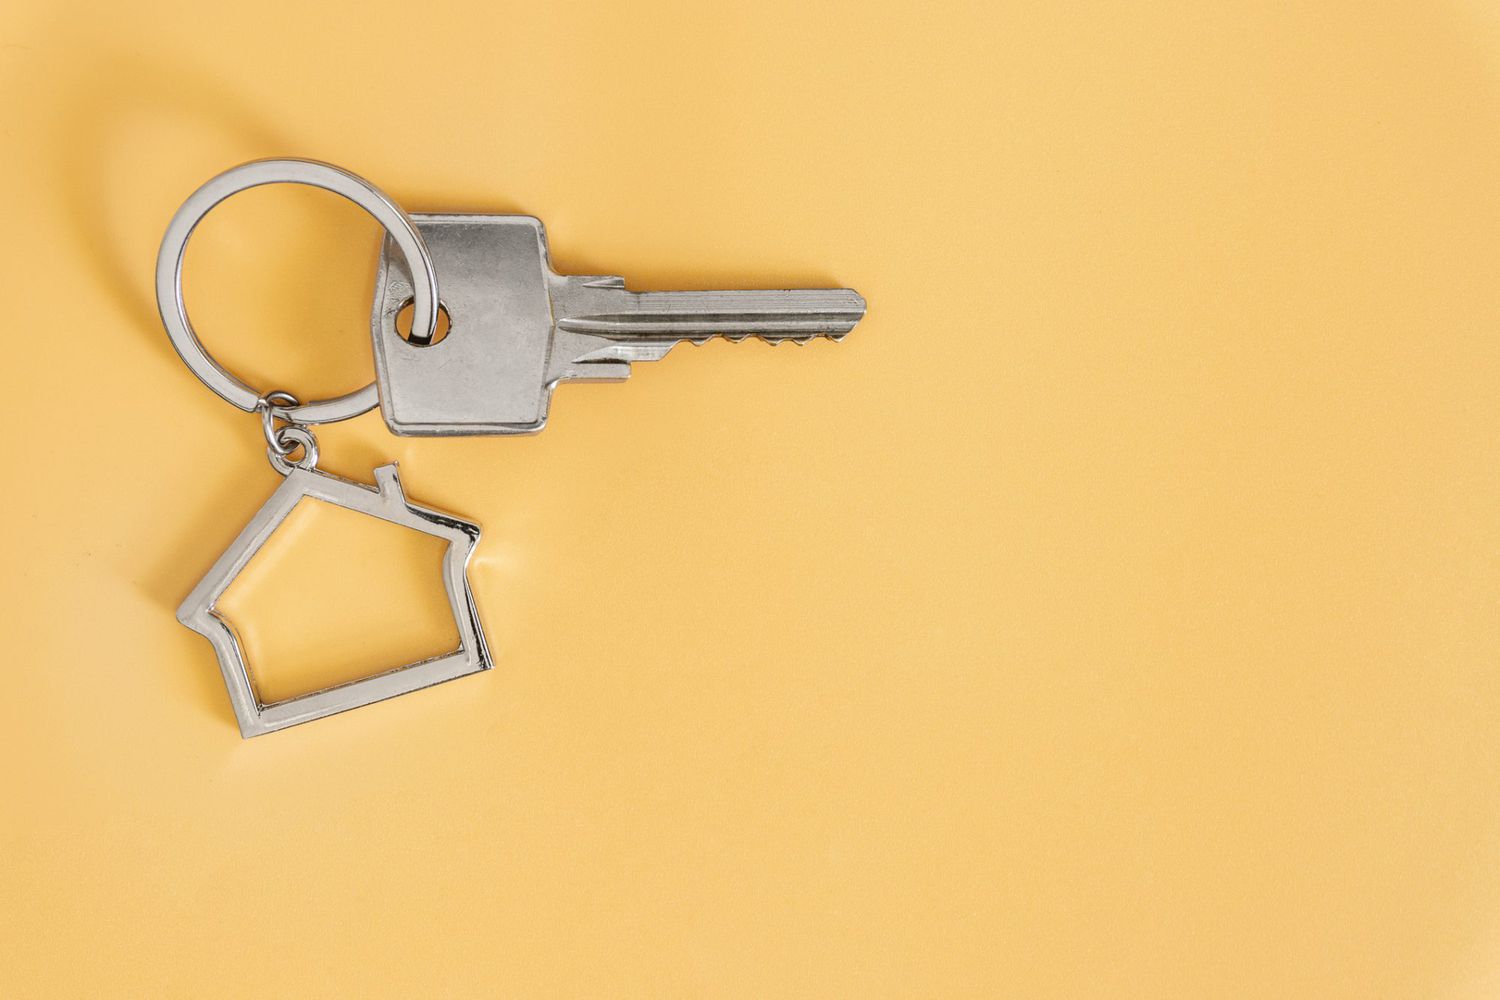 An image of house keys.